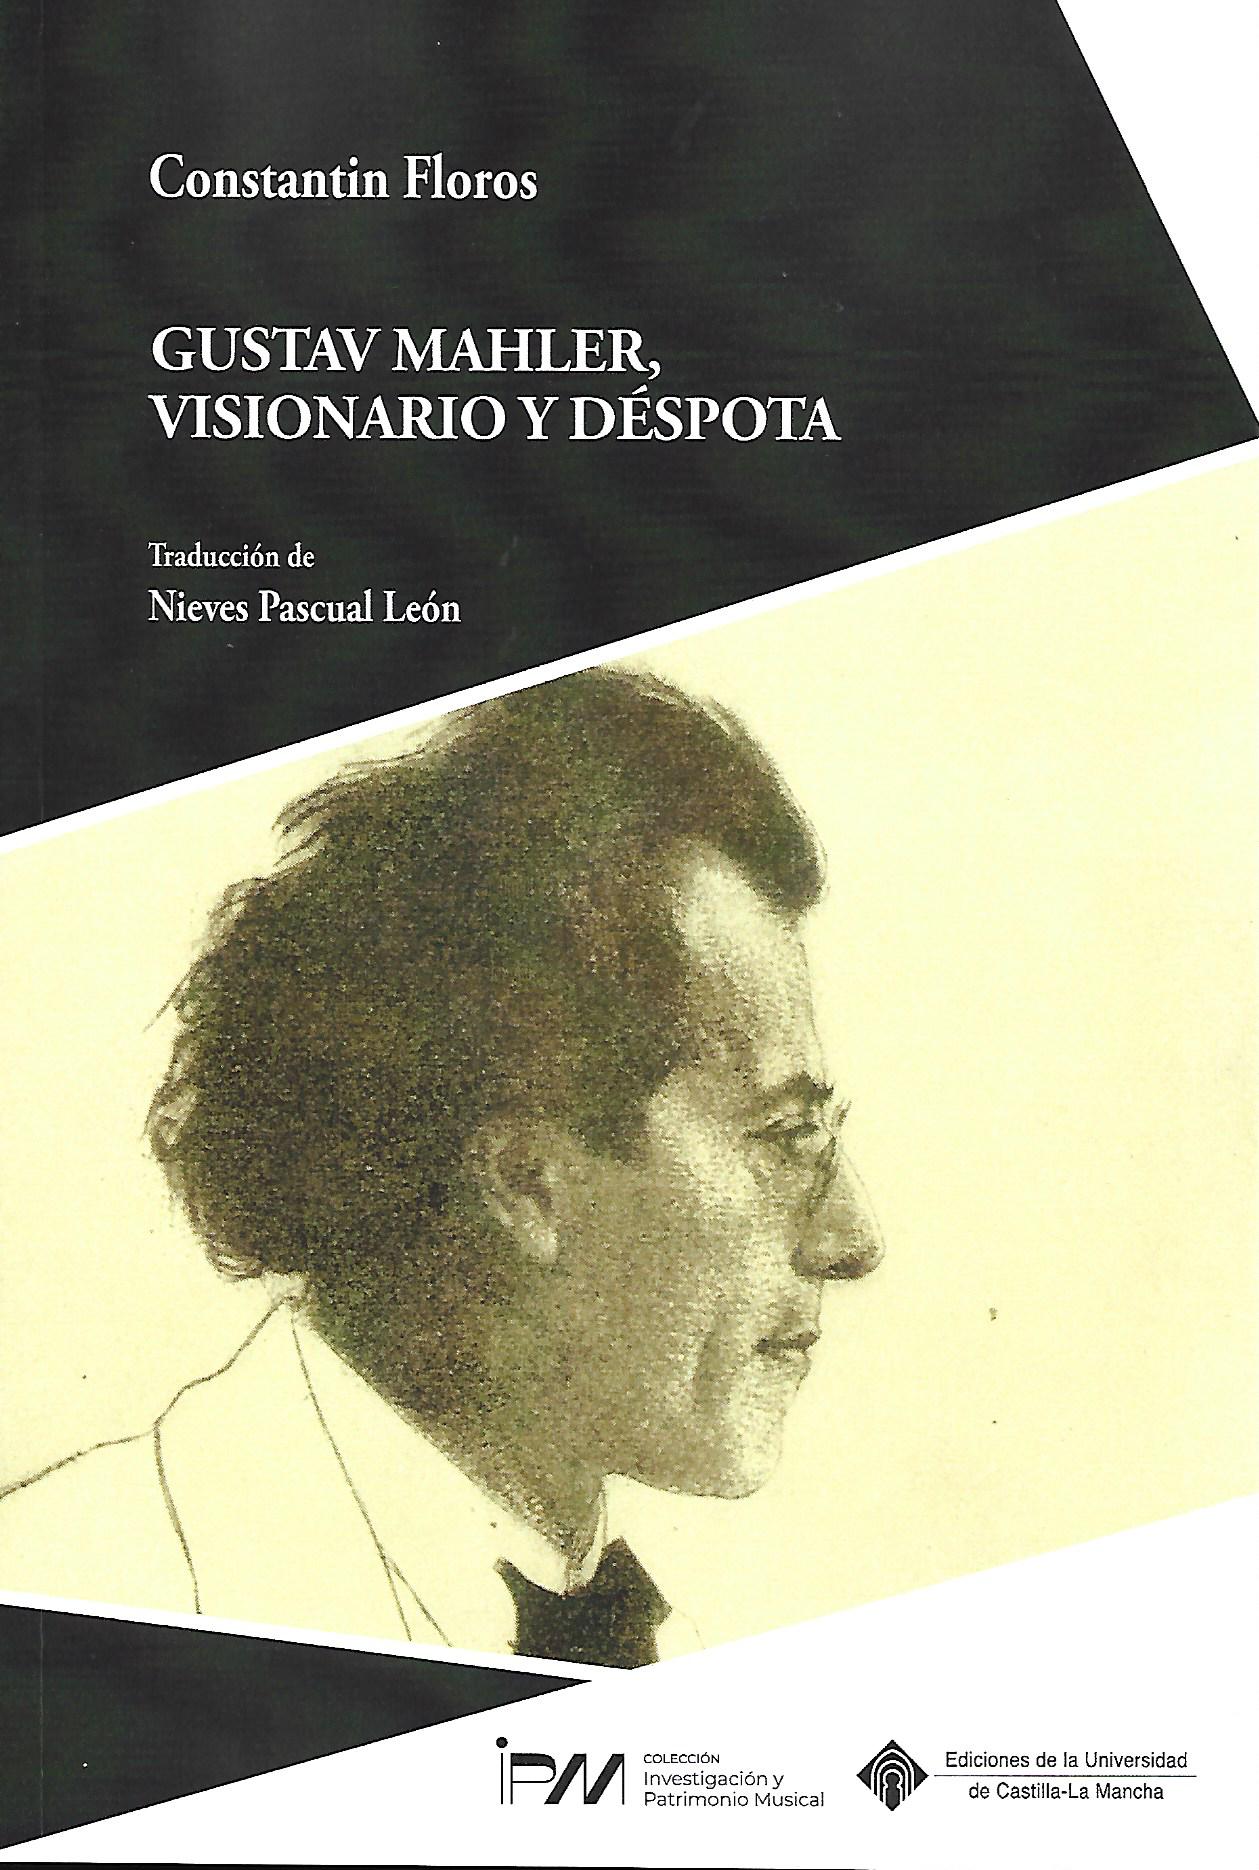 Gustav Mahler, visionario y dspota